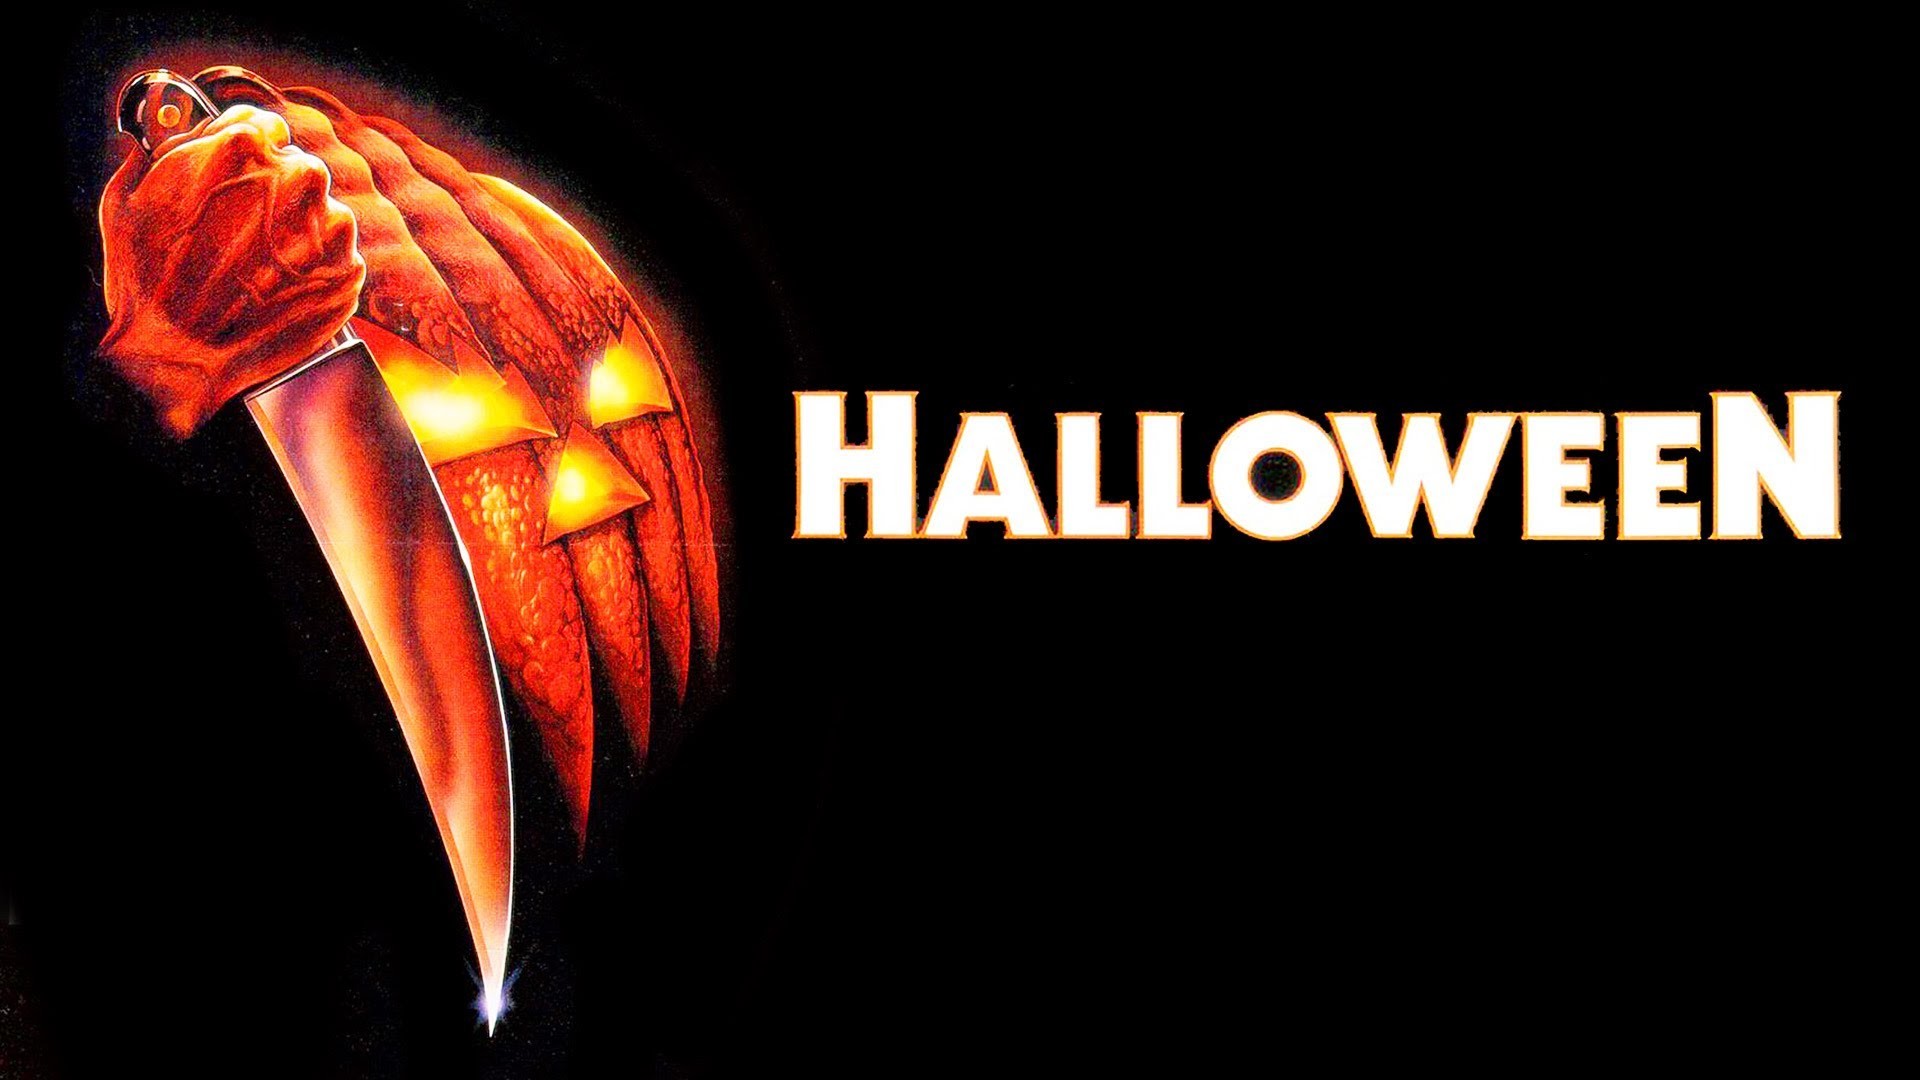 Download Halloween FHD 1080p Desktop Backgrounds For PC Mac Wallpaper   GetWallsio